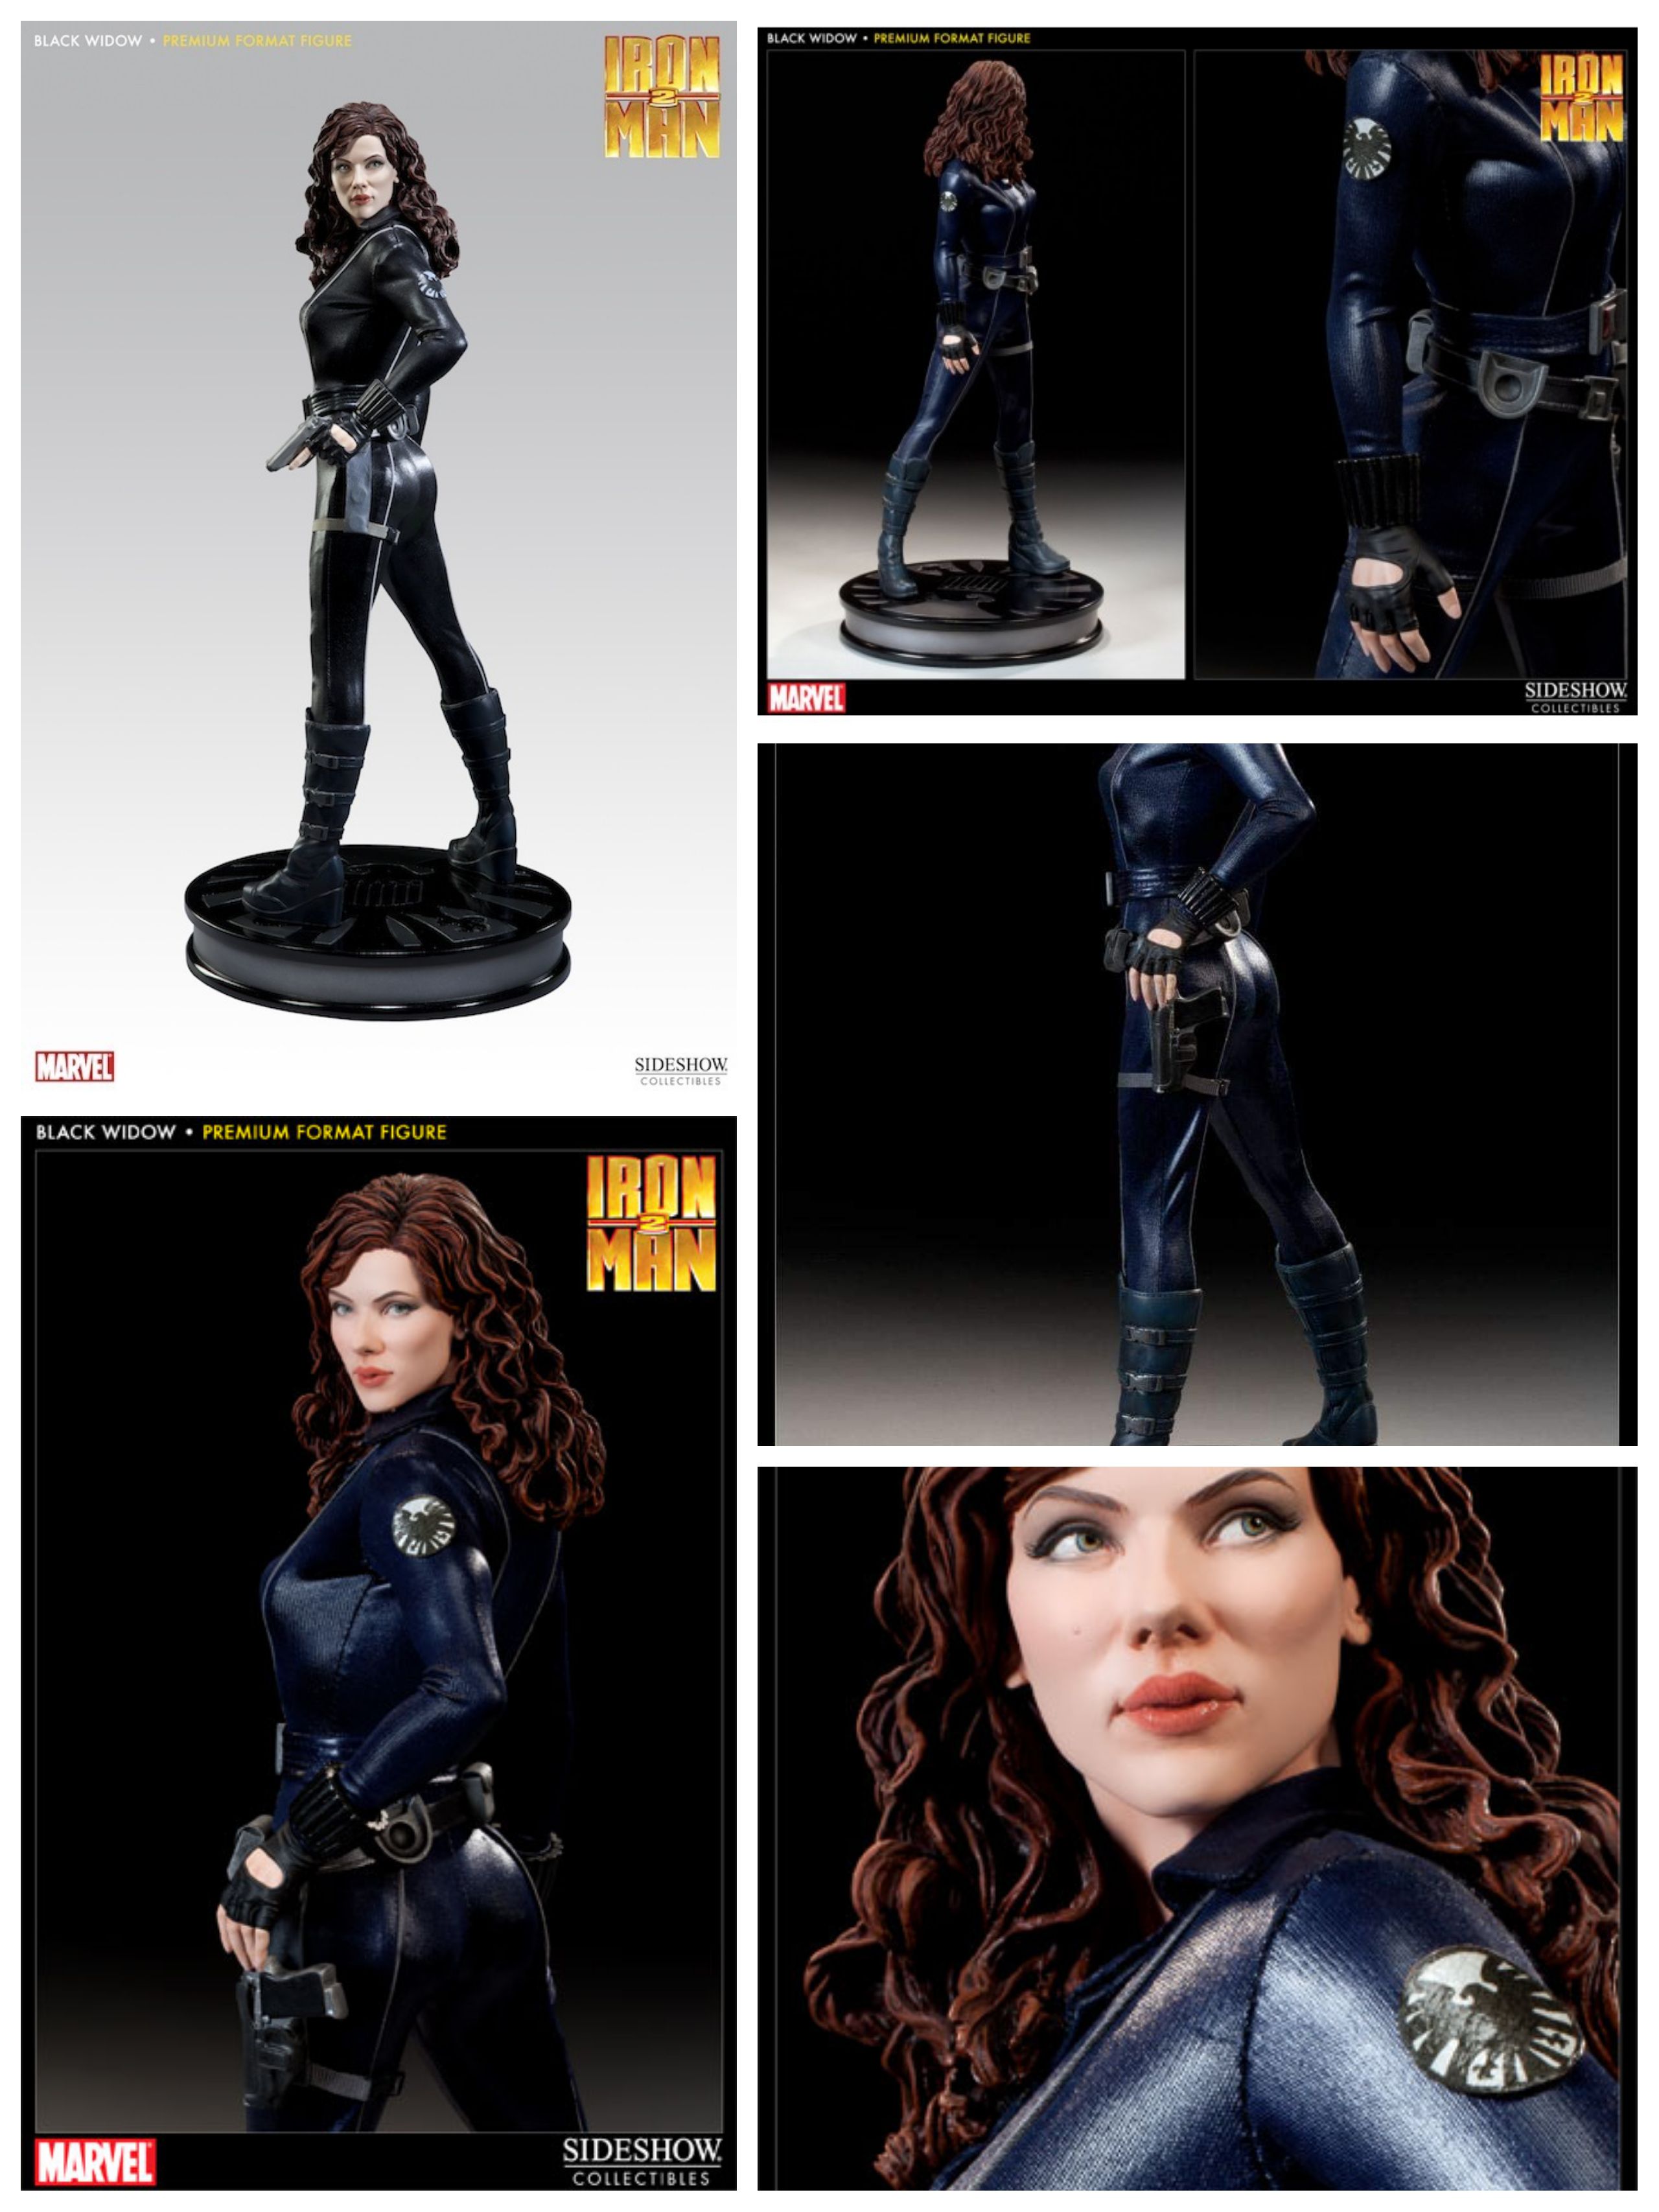 Sideshow Collectibles Marvel Iron Man 2 Black Widow Premium Format Statue Figure